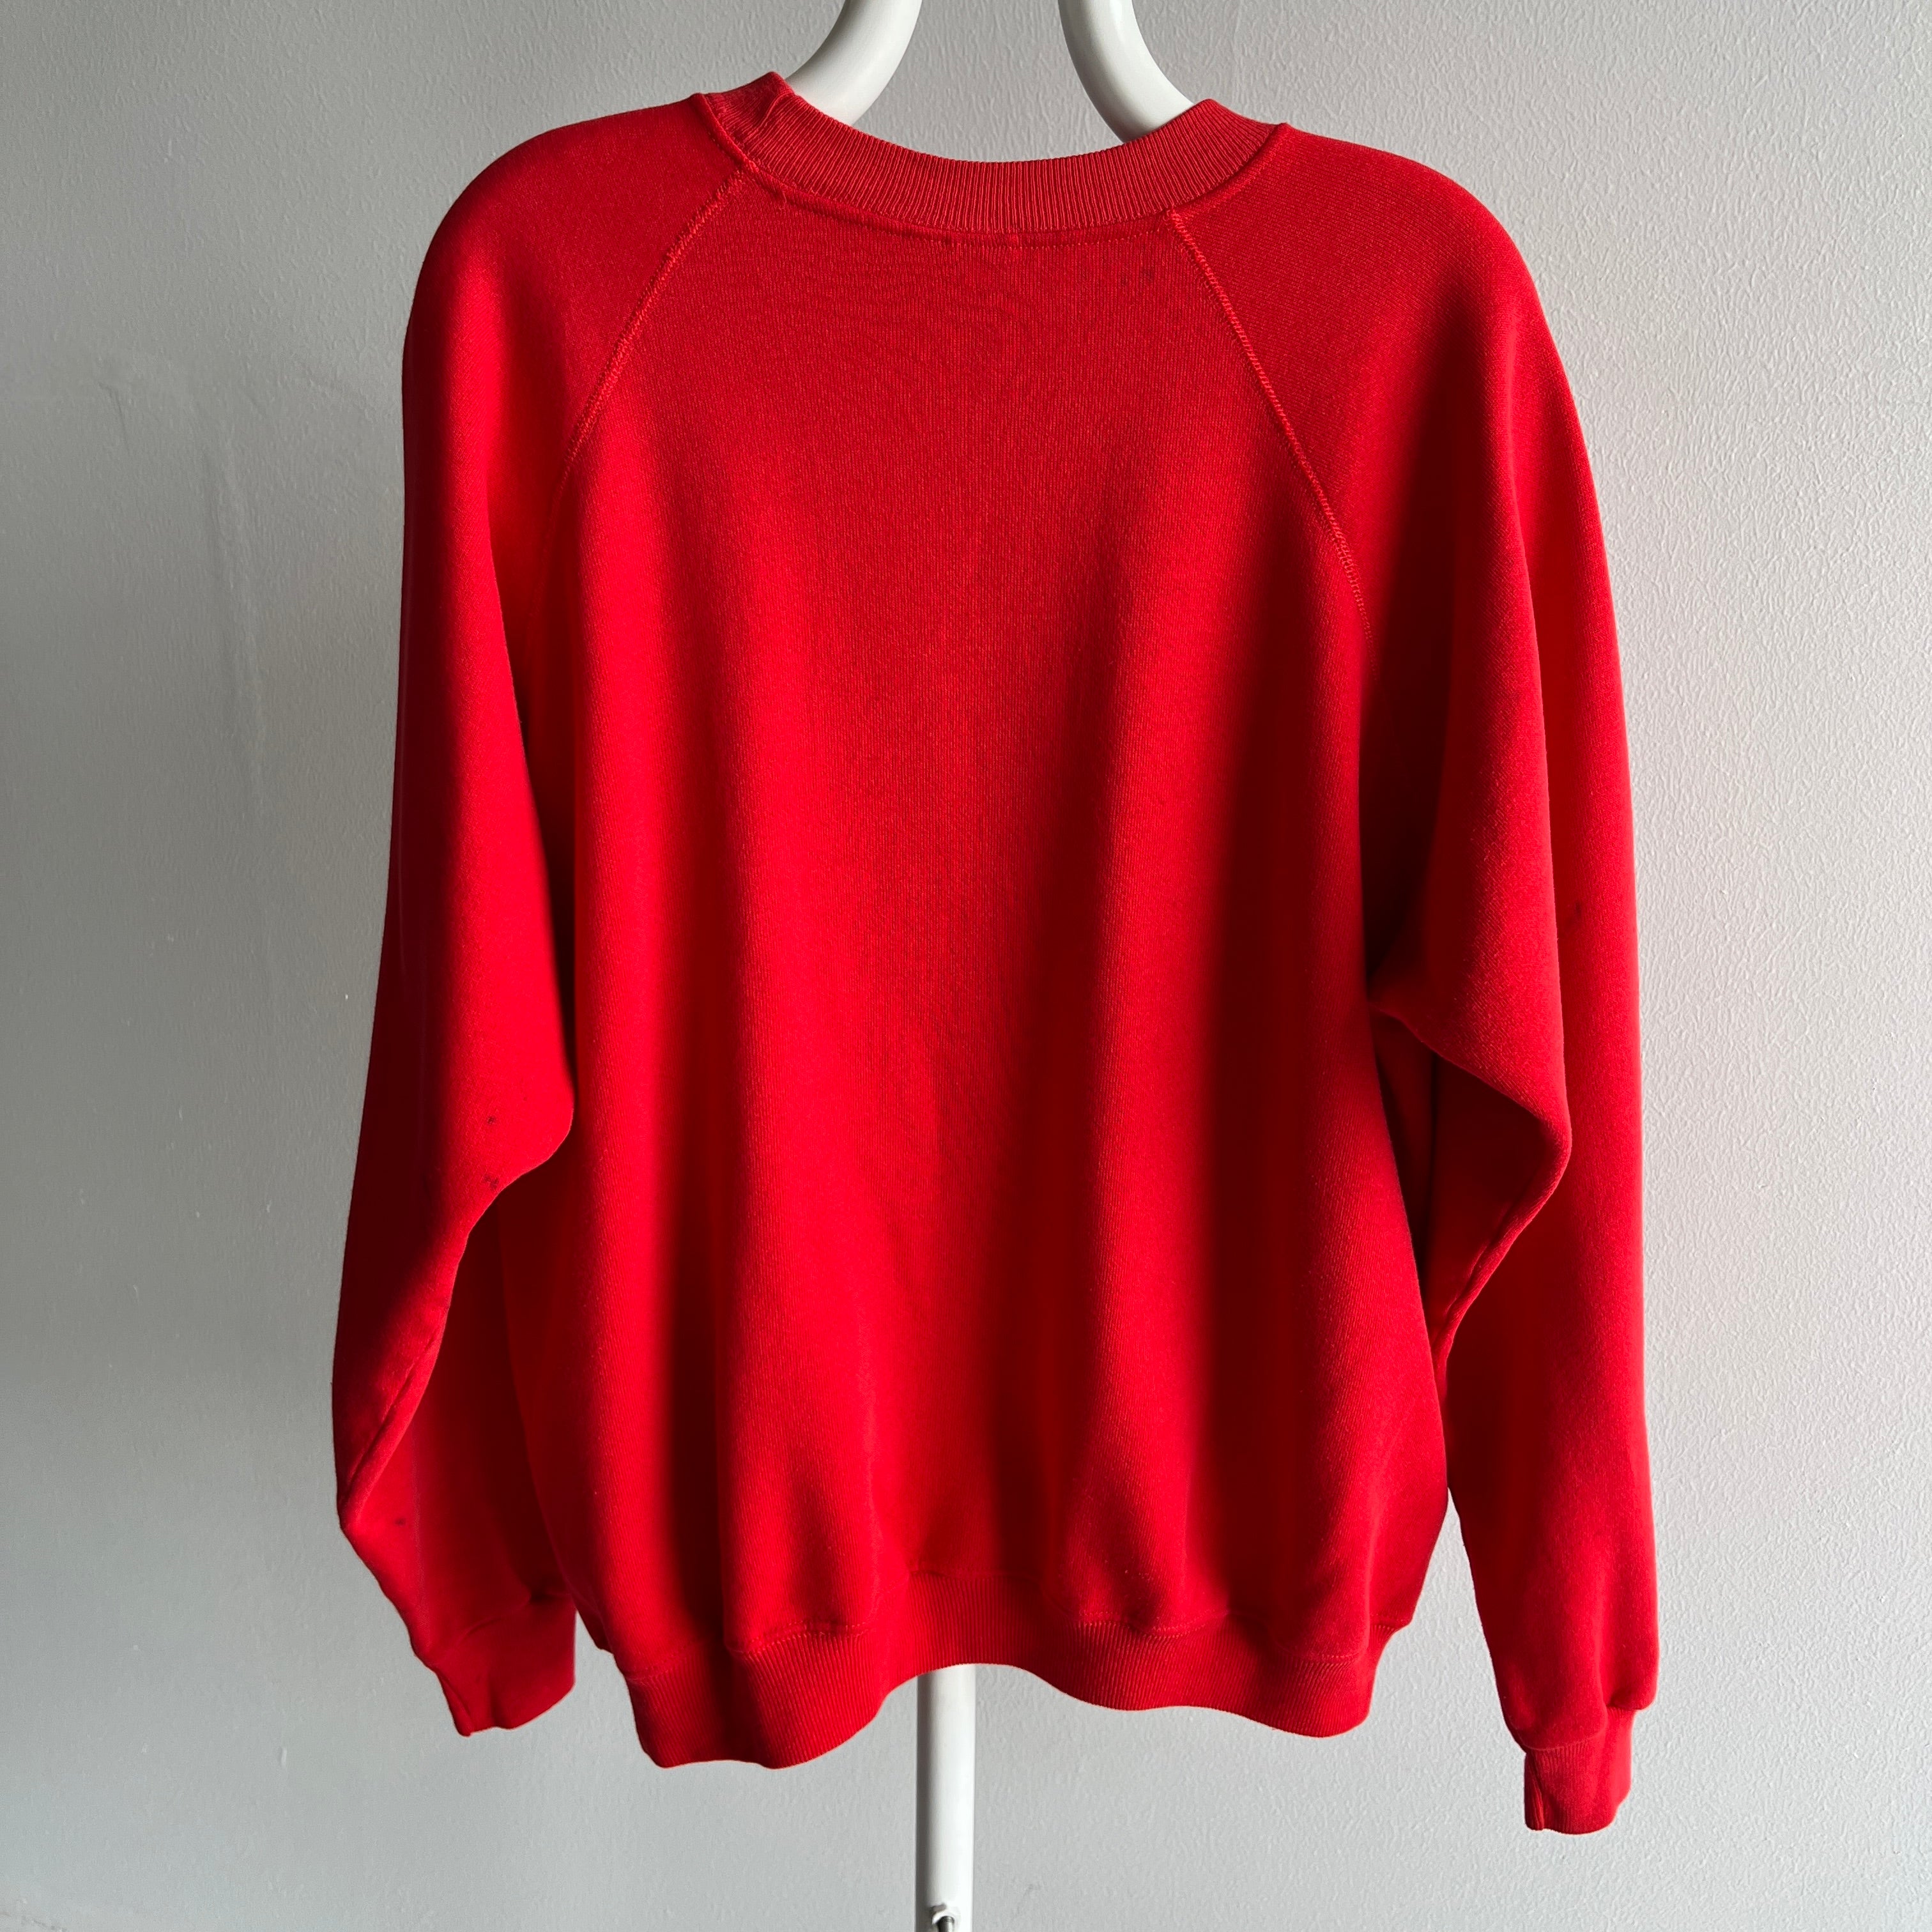 1980s Kappa Alpha Red & Gold Ball Sweatshirt - WOWZA